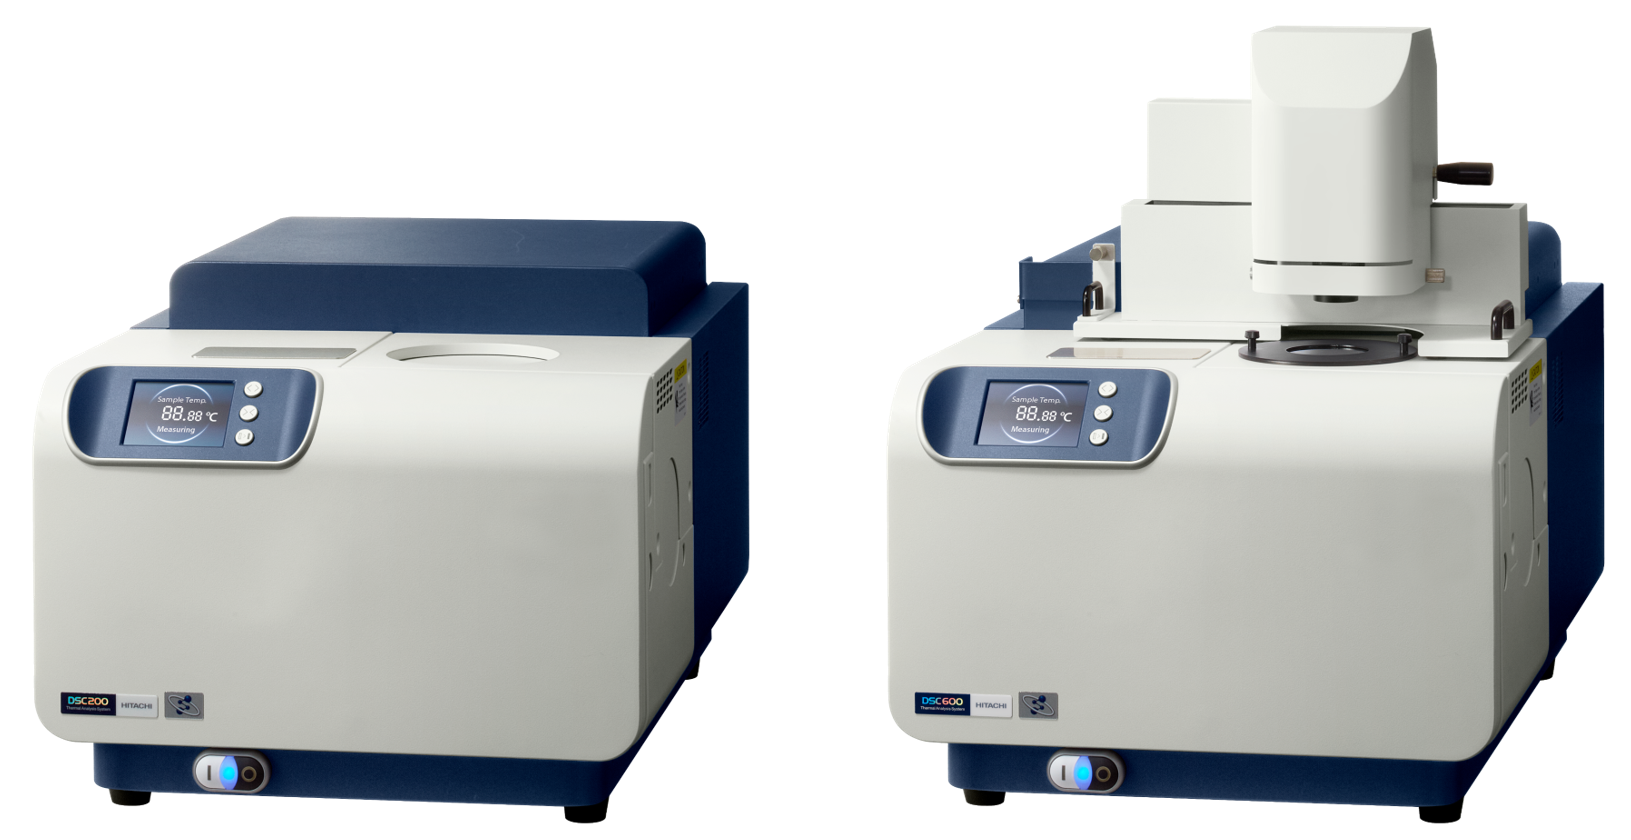 Differential Scanning Calorimeters - NEXTA DSC200 and NEXTA DSC600